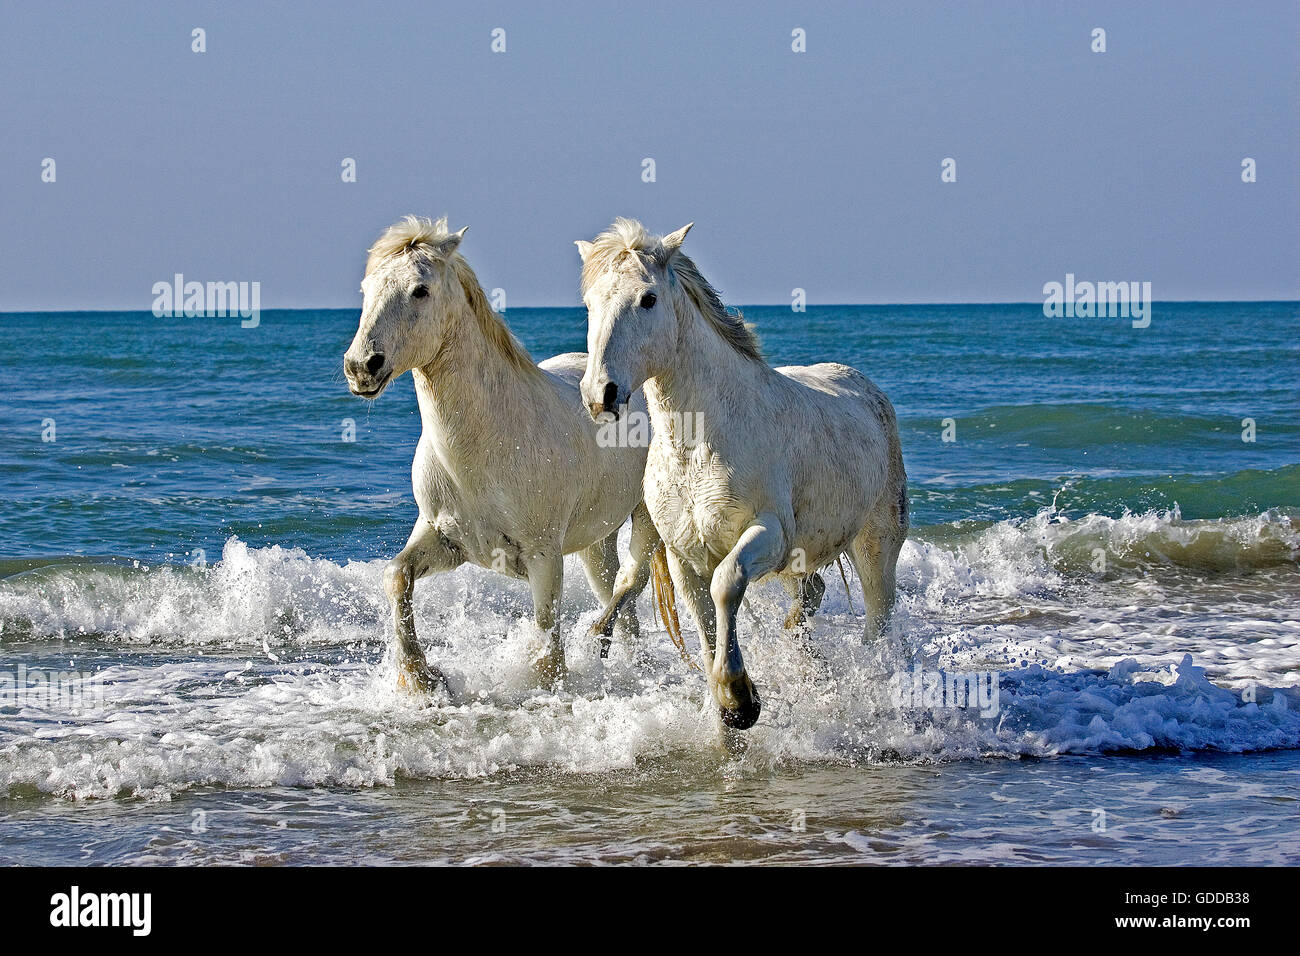 CAMARGUE HORSE, PAIR ON BEACH, SAINTES MARIE DE LA MER IN SOUTH OF FRANCE Stock Photo